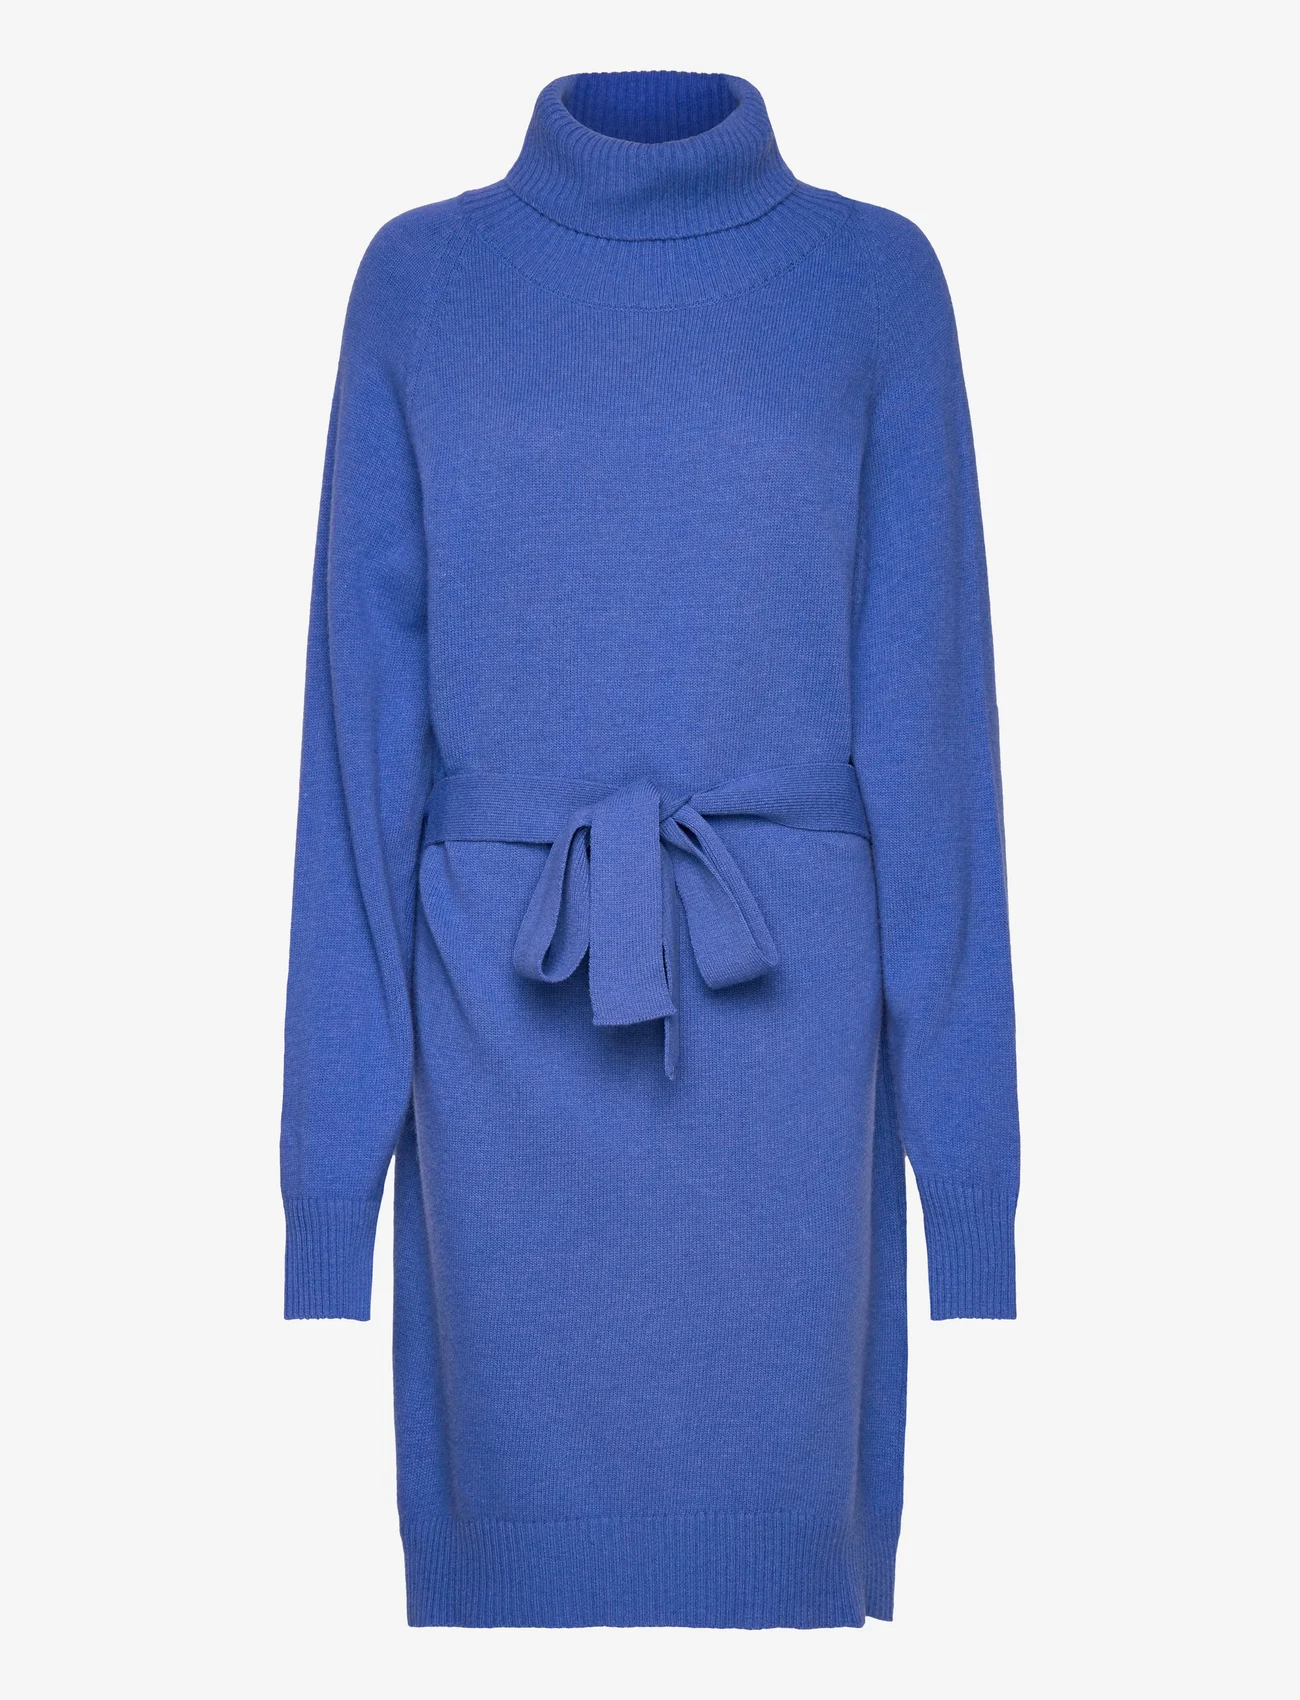 IVY OAK - Mini Knit Dress - knitted dresses - light cobalt blue - 0